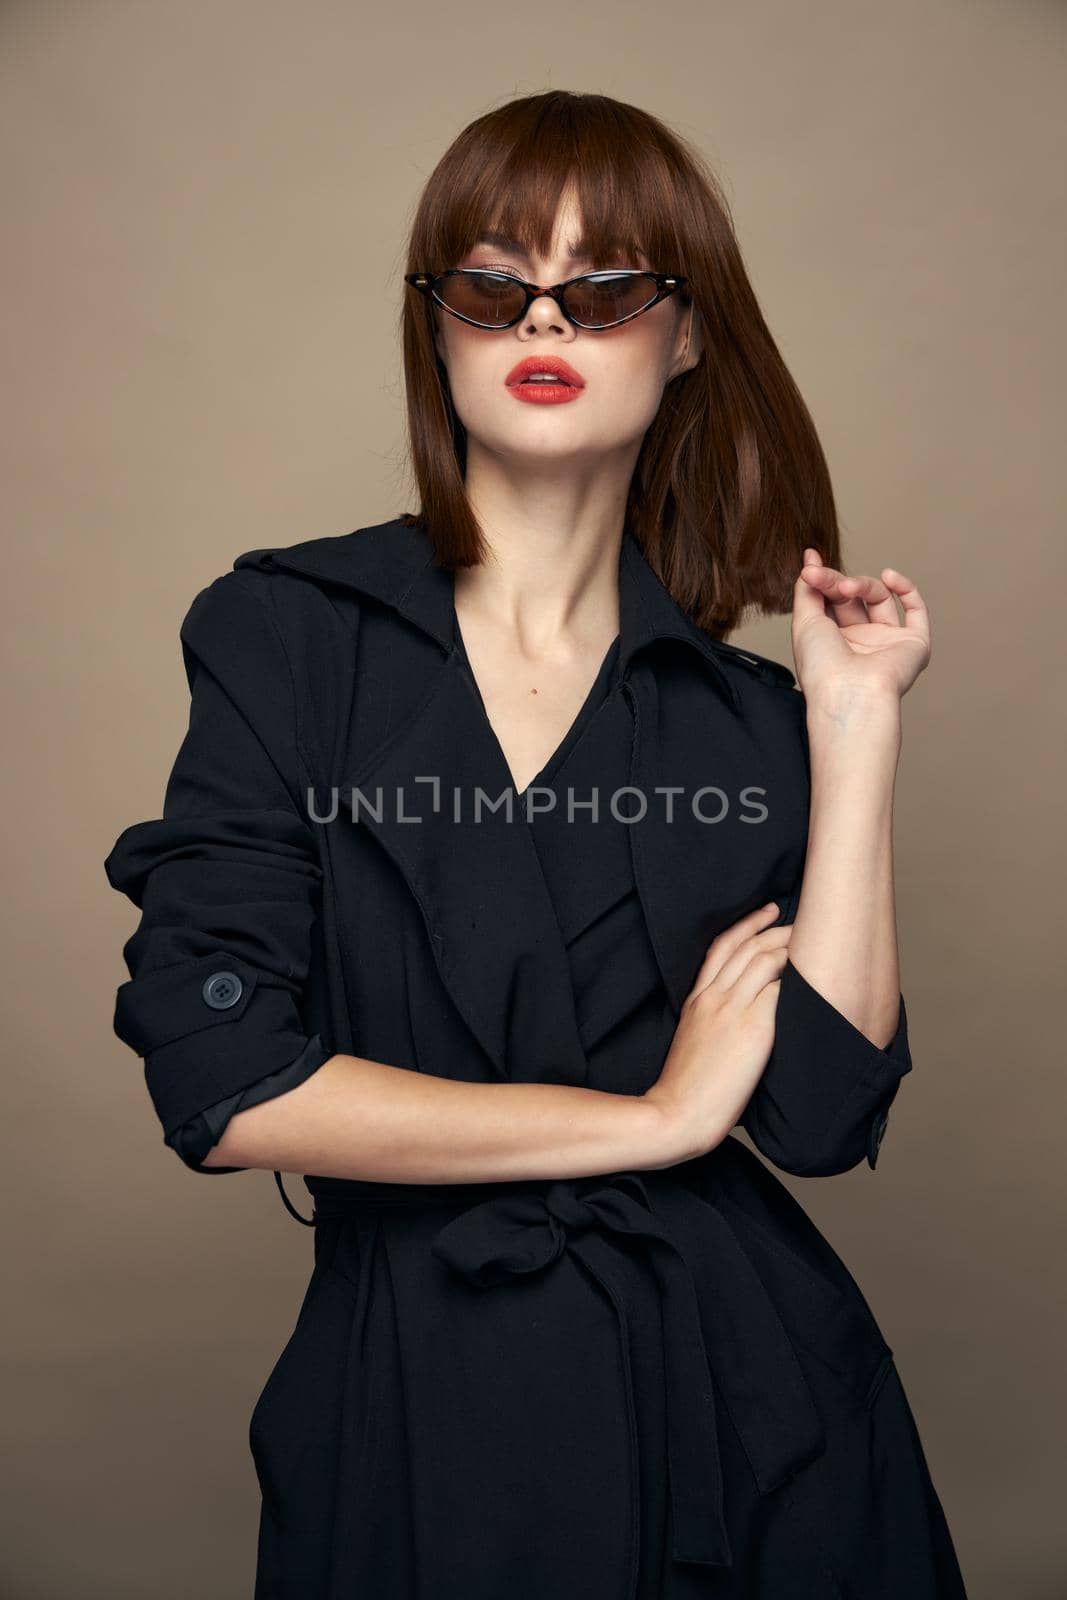 Stylish Woman Red lips sunglasses black coat isolated background by SHOTPRIME